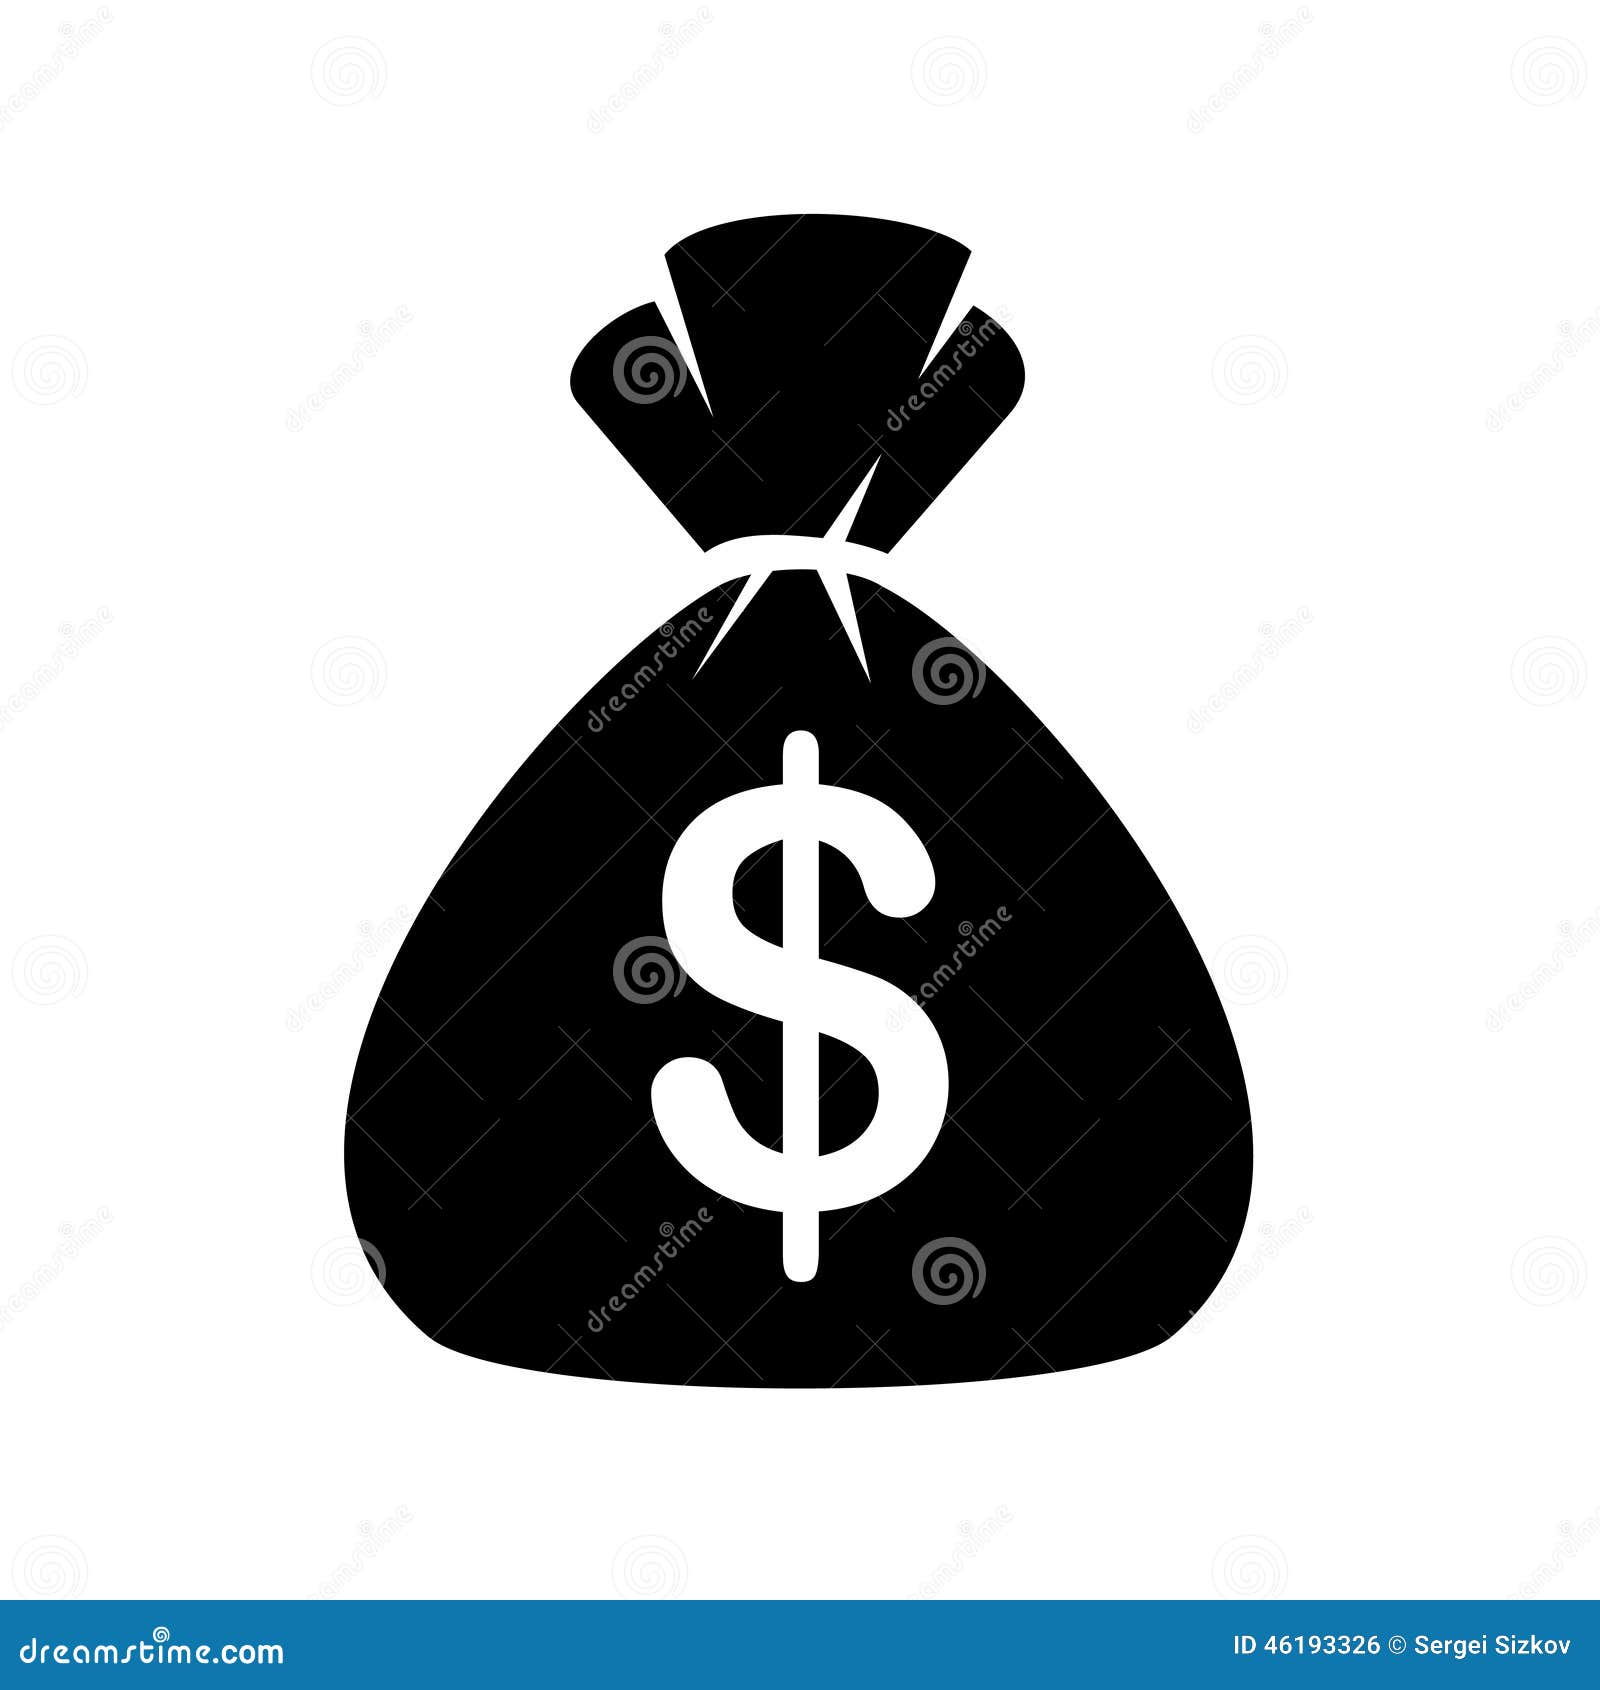 money bag icon on white background. 